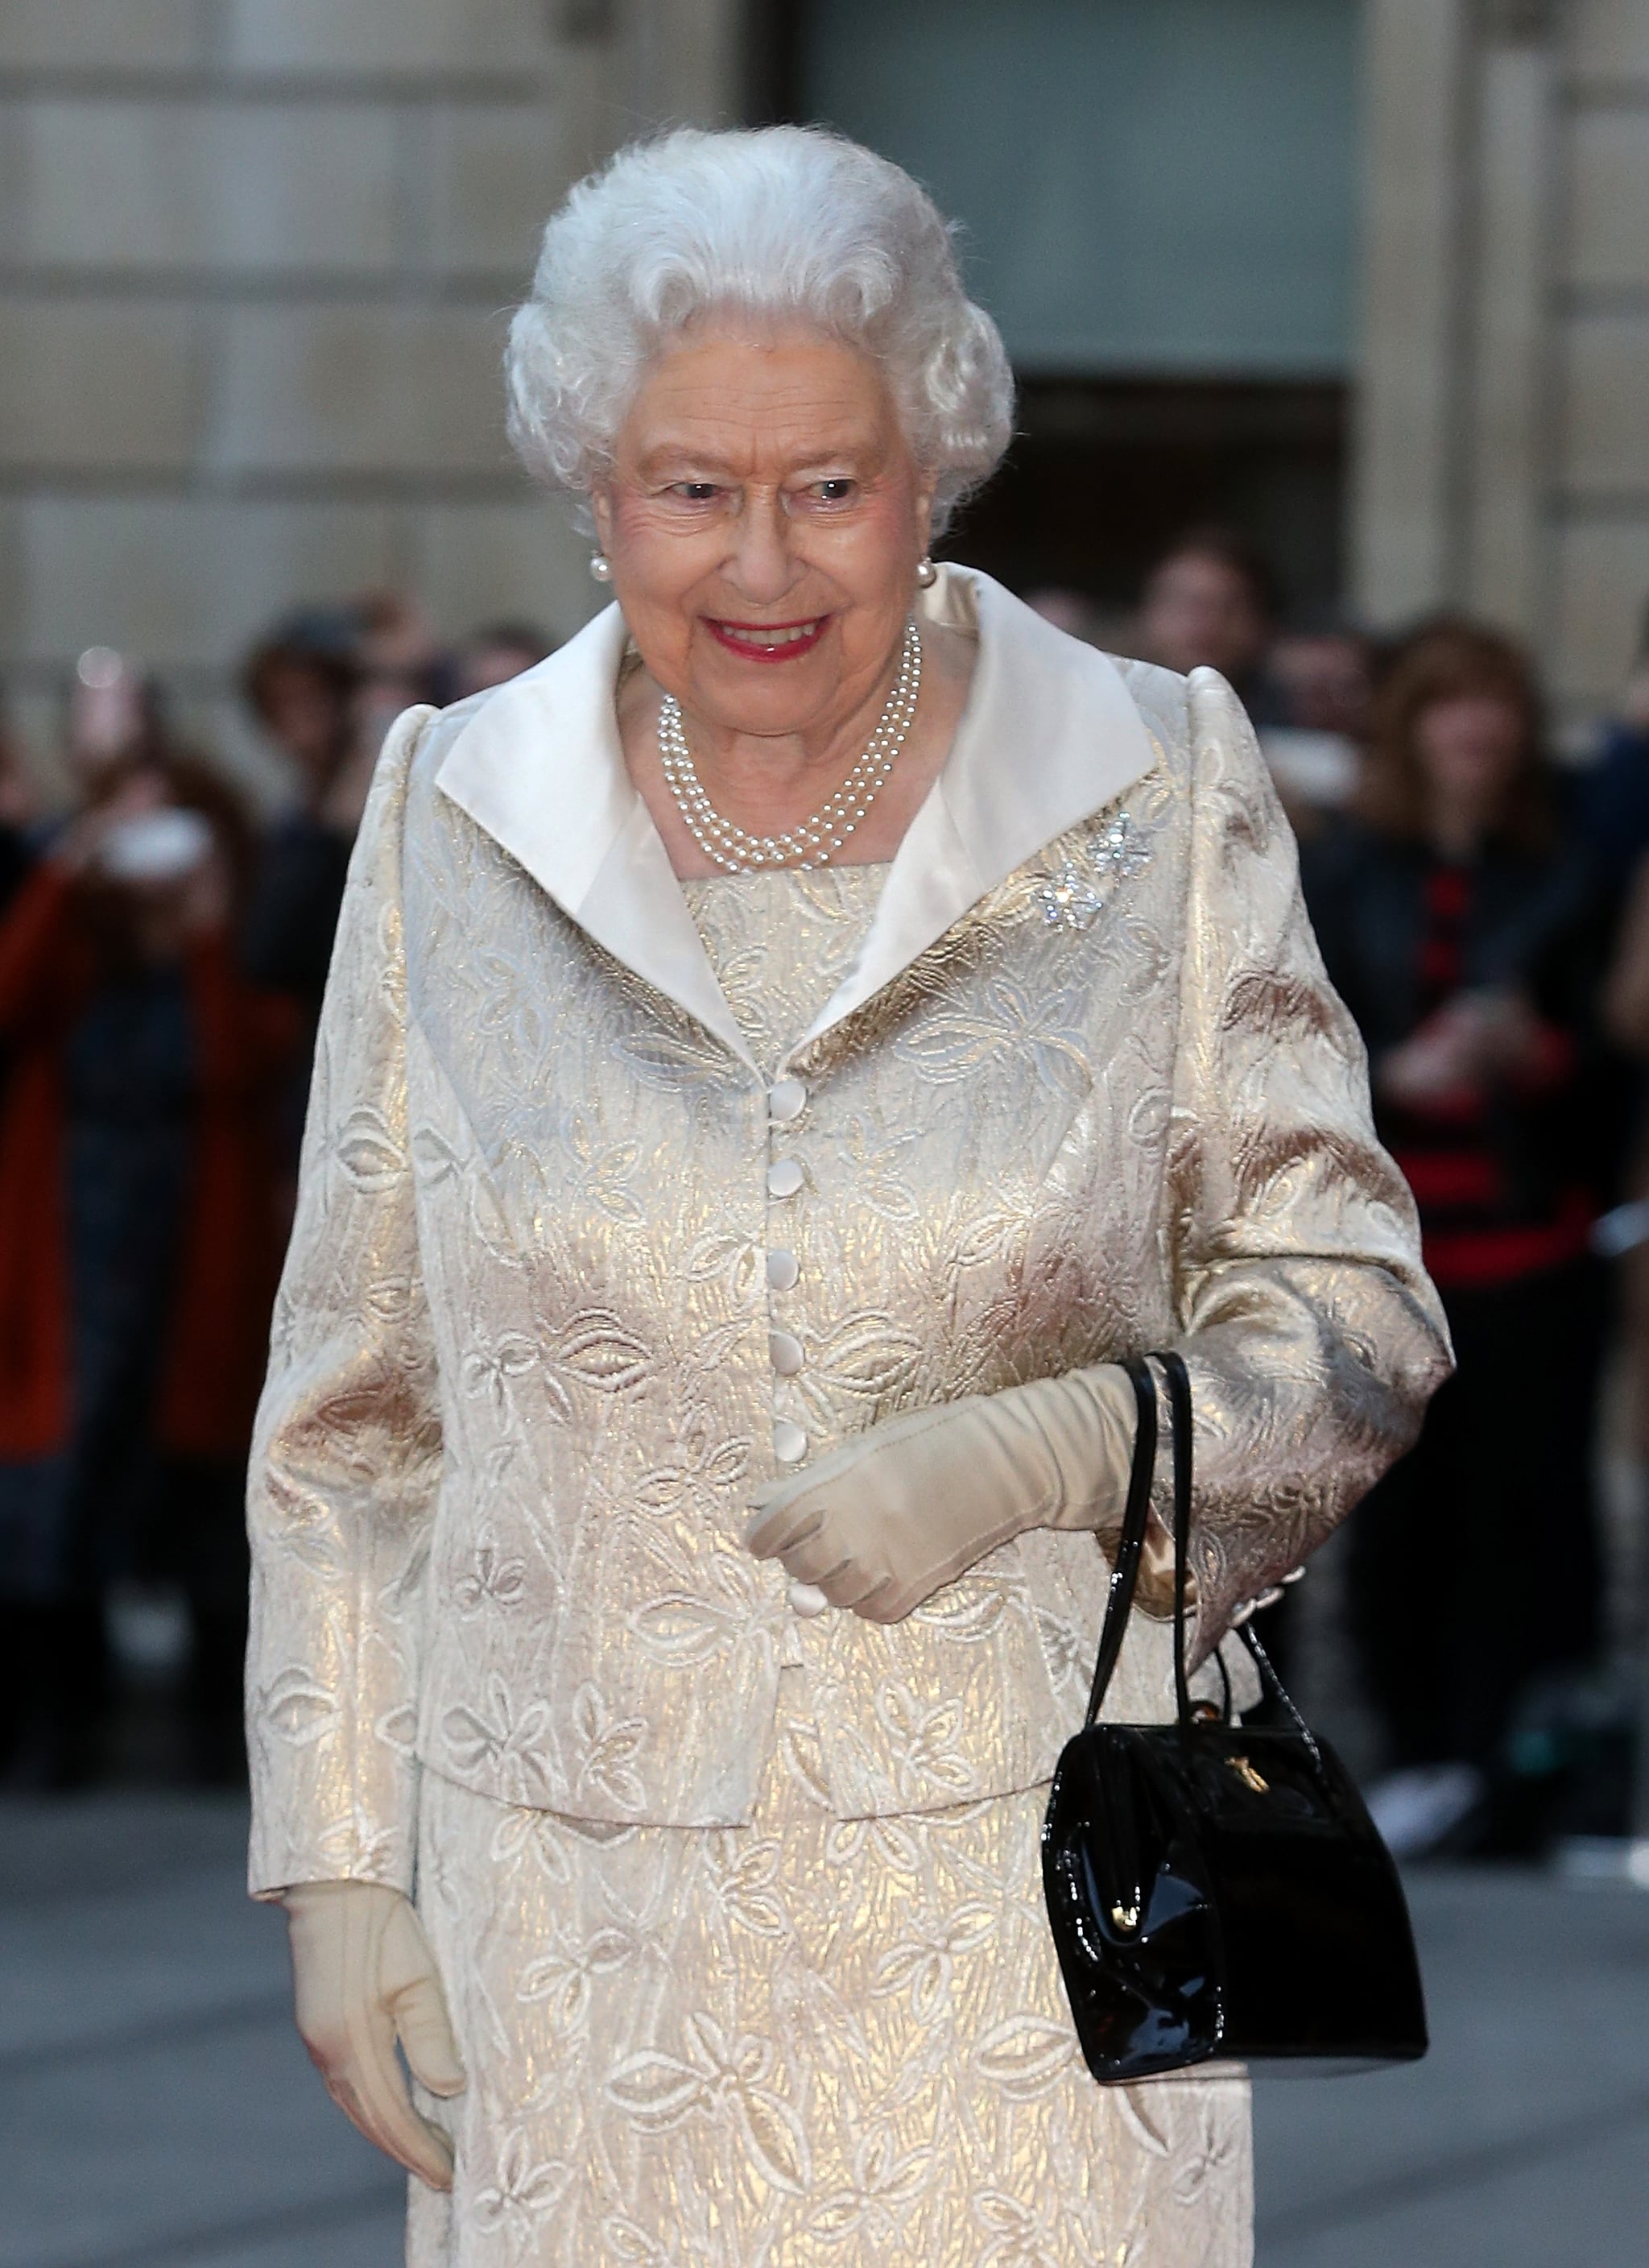 Queen Elizabeth II attends the Royal Academy of Arts in 2016